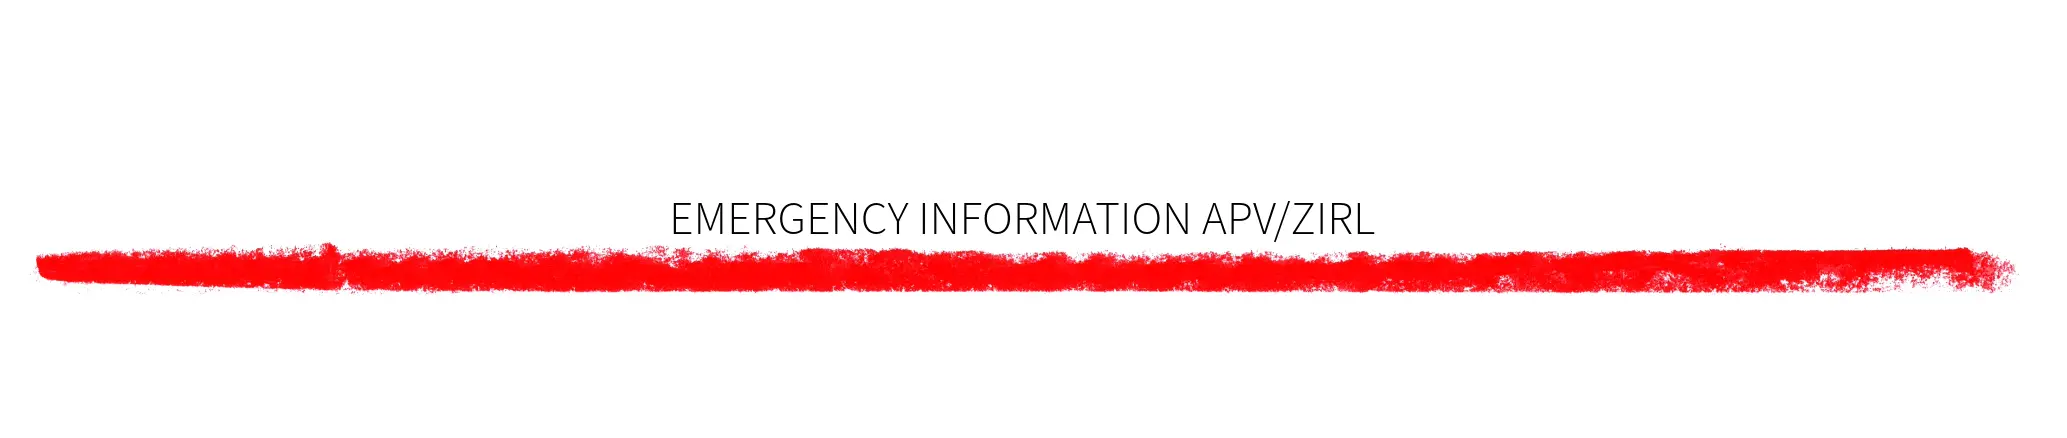 Emergency Information APV/ZIRL